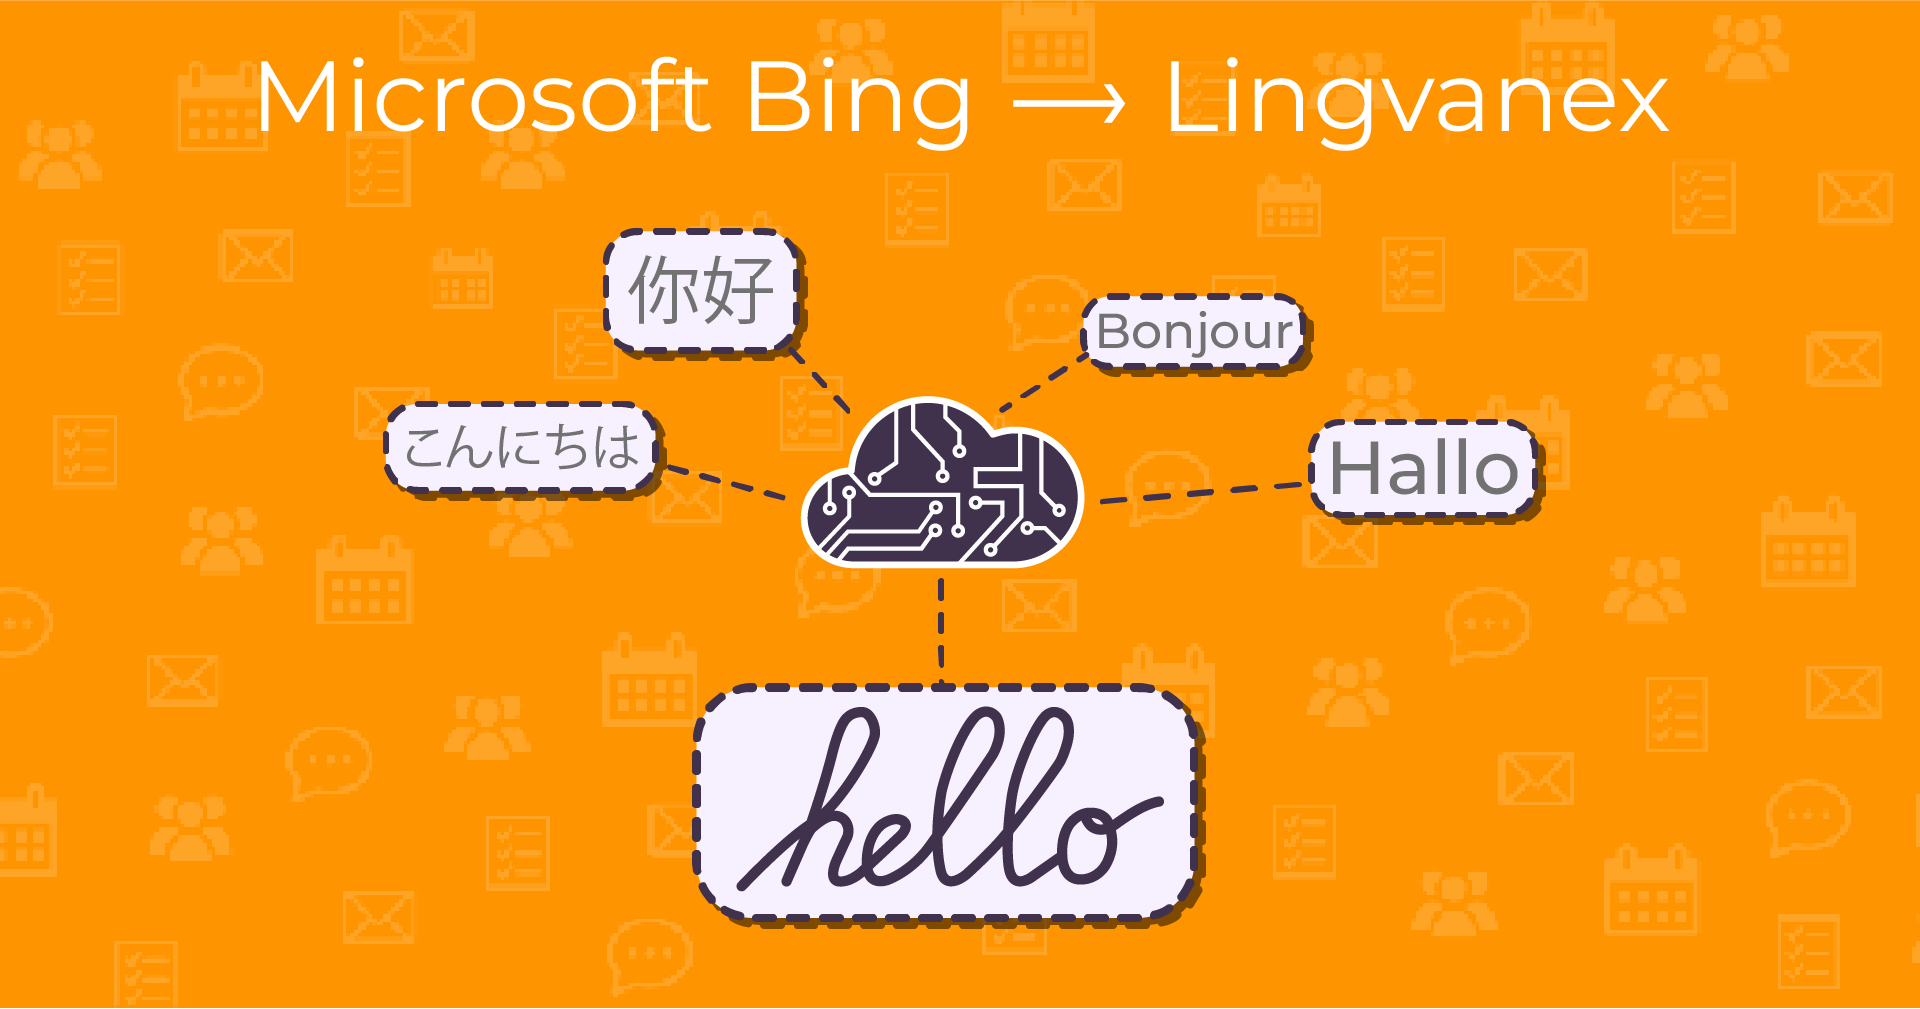 Microsoft Bing - Lingvanex